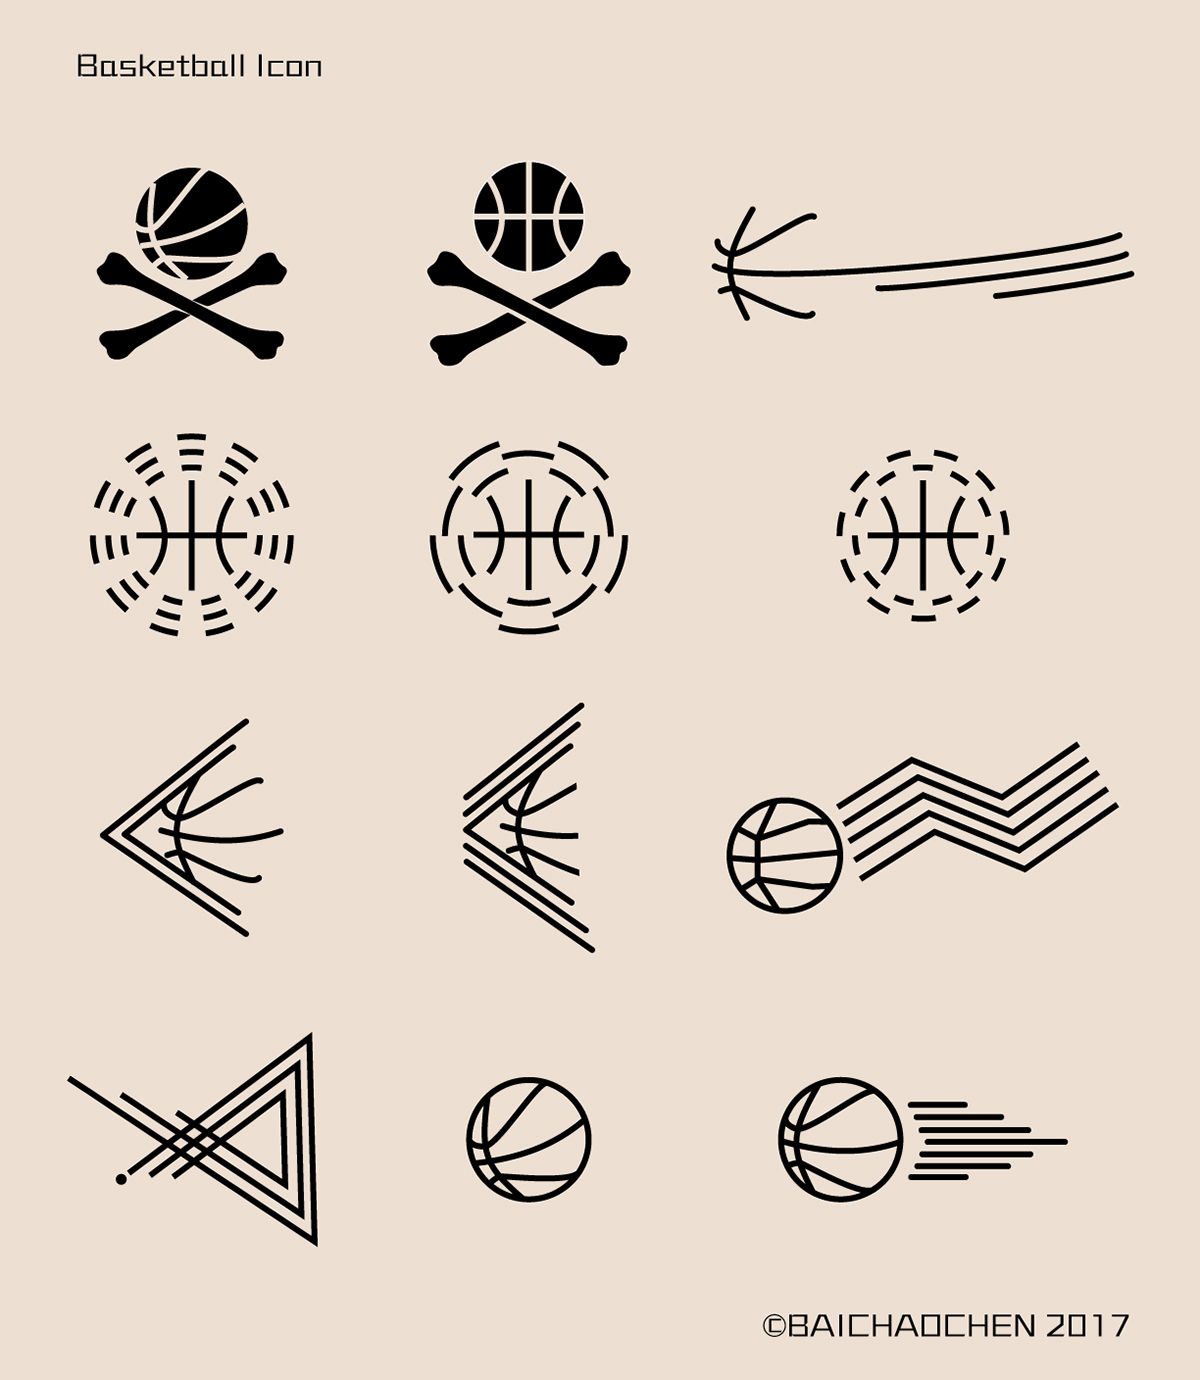 icon basketball sprots